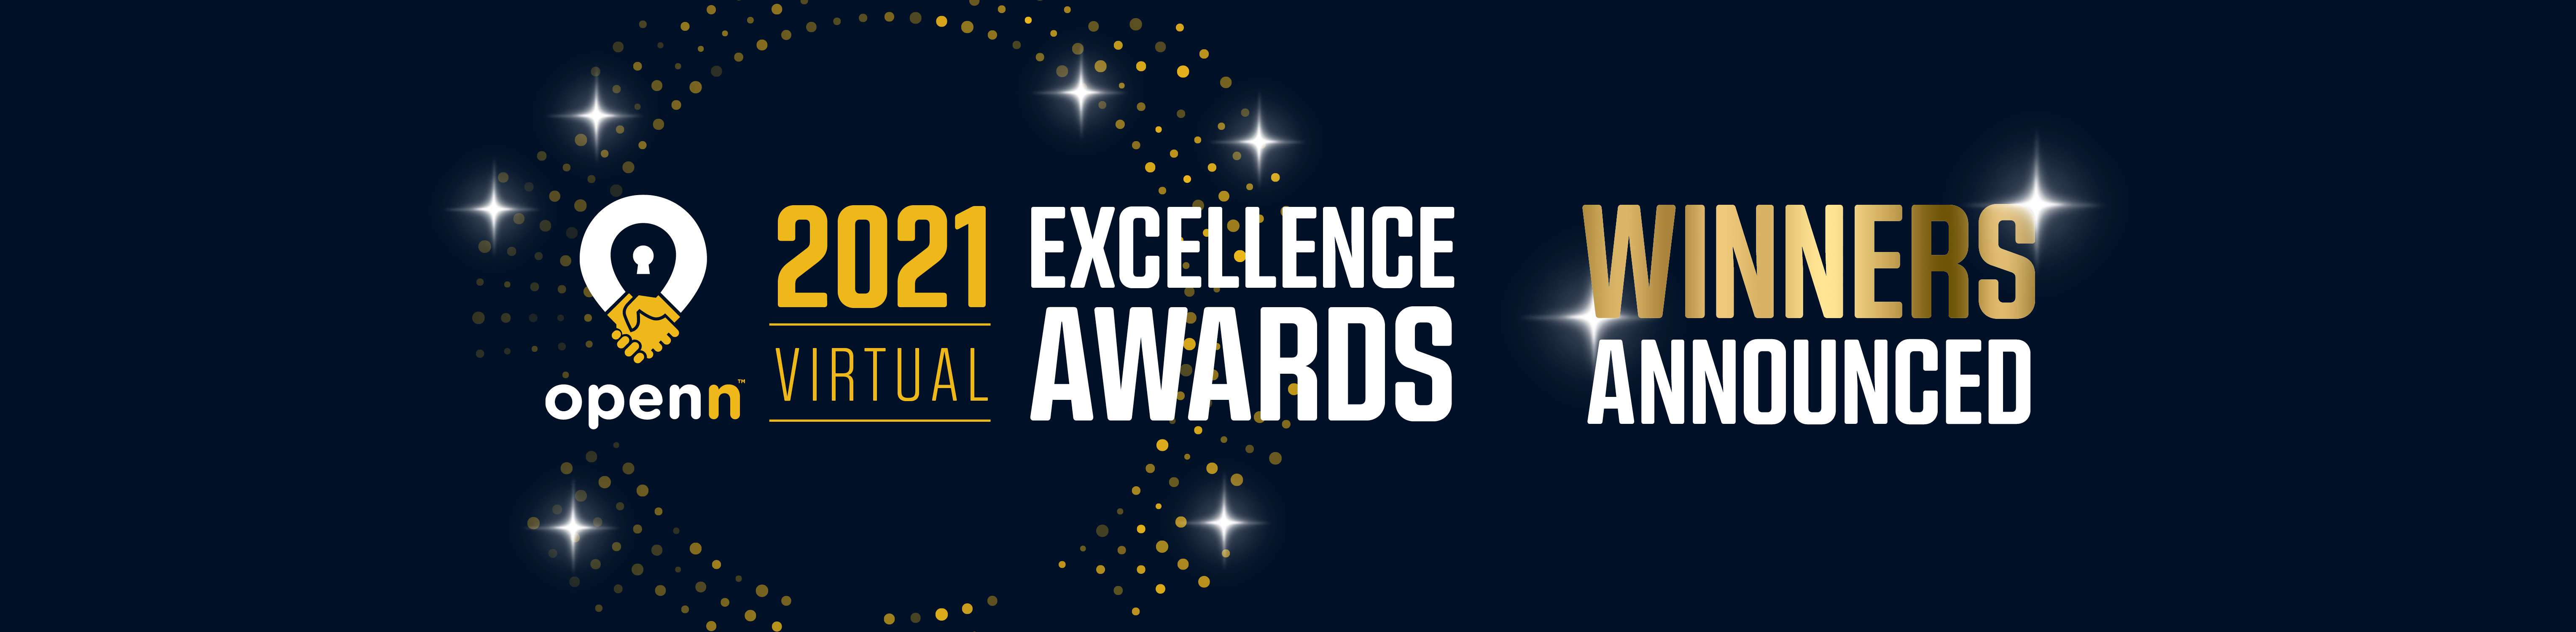 Openn Excellence Awards_LP banner_Winners_6110x1500px_1